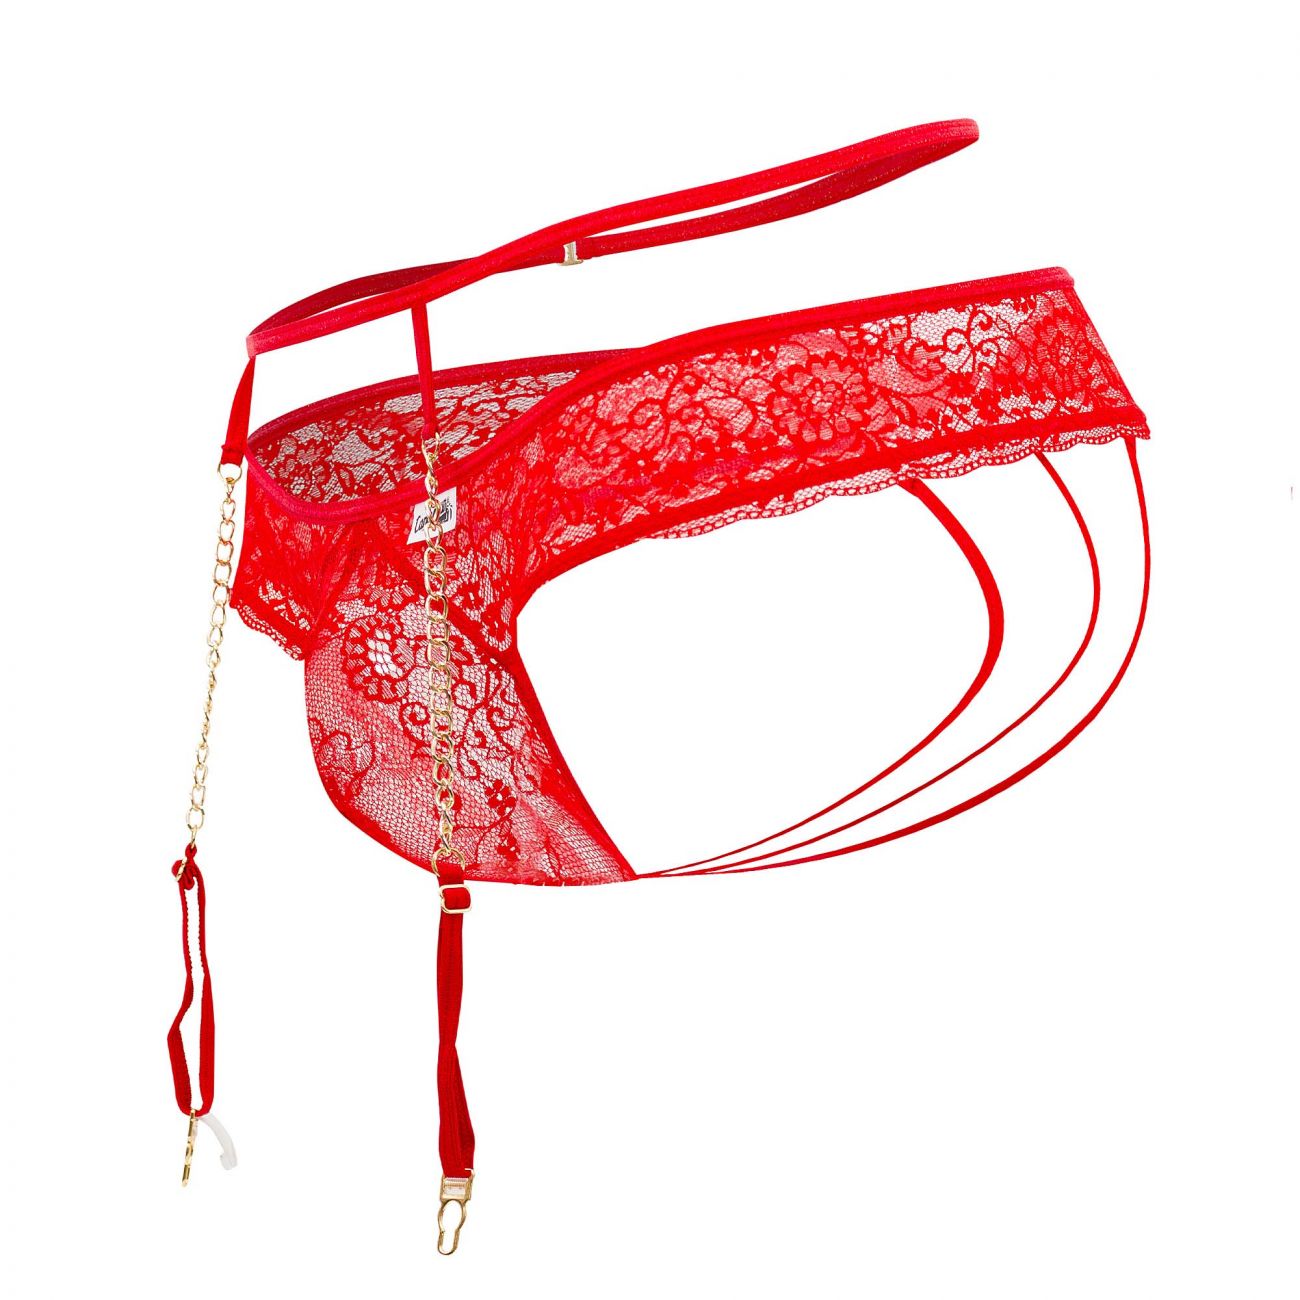 CandyMan 99566 Lace Garter-Jockstrap Outfit Red